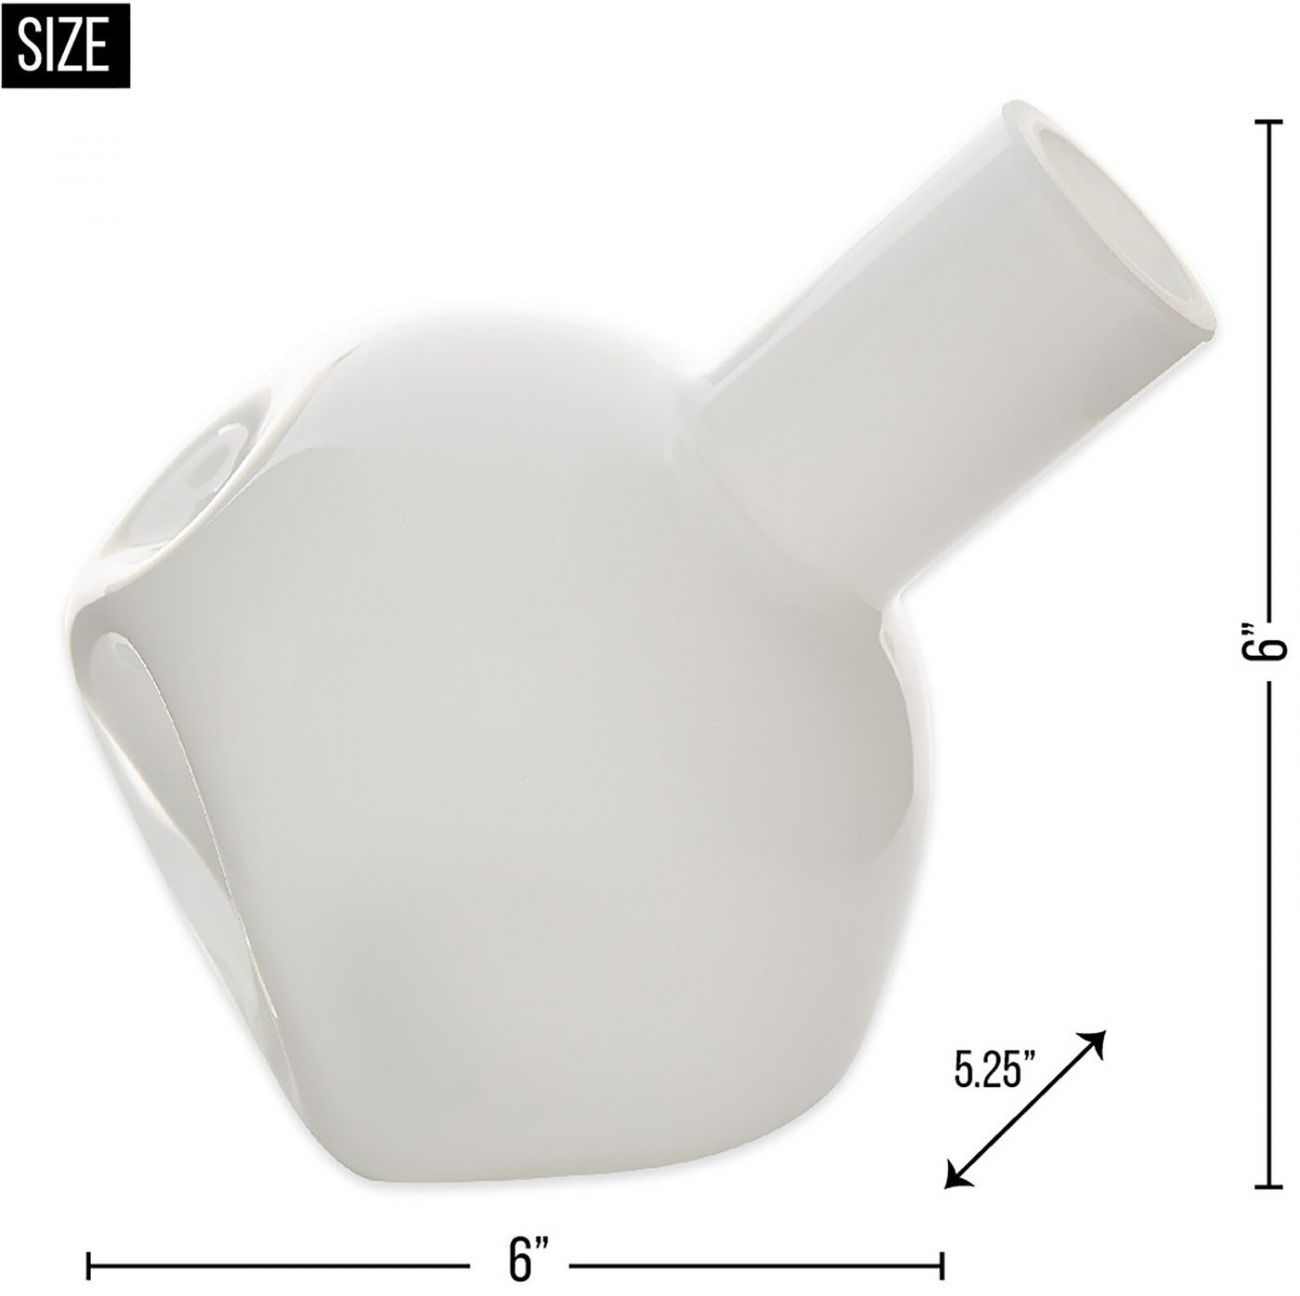 White Abstract Vase